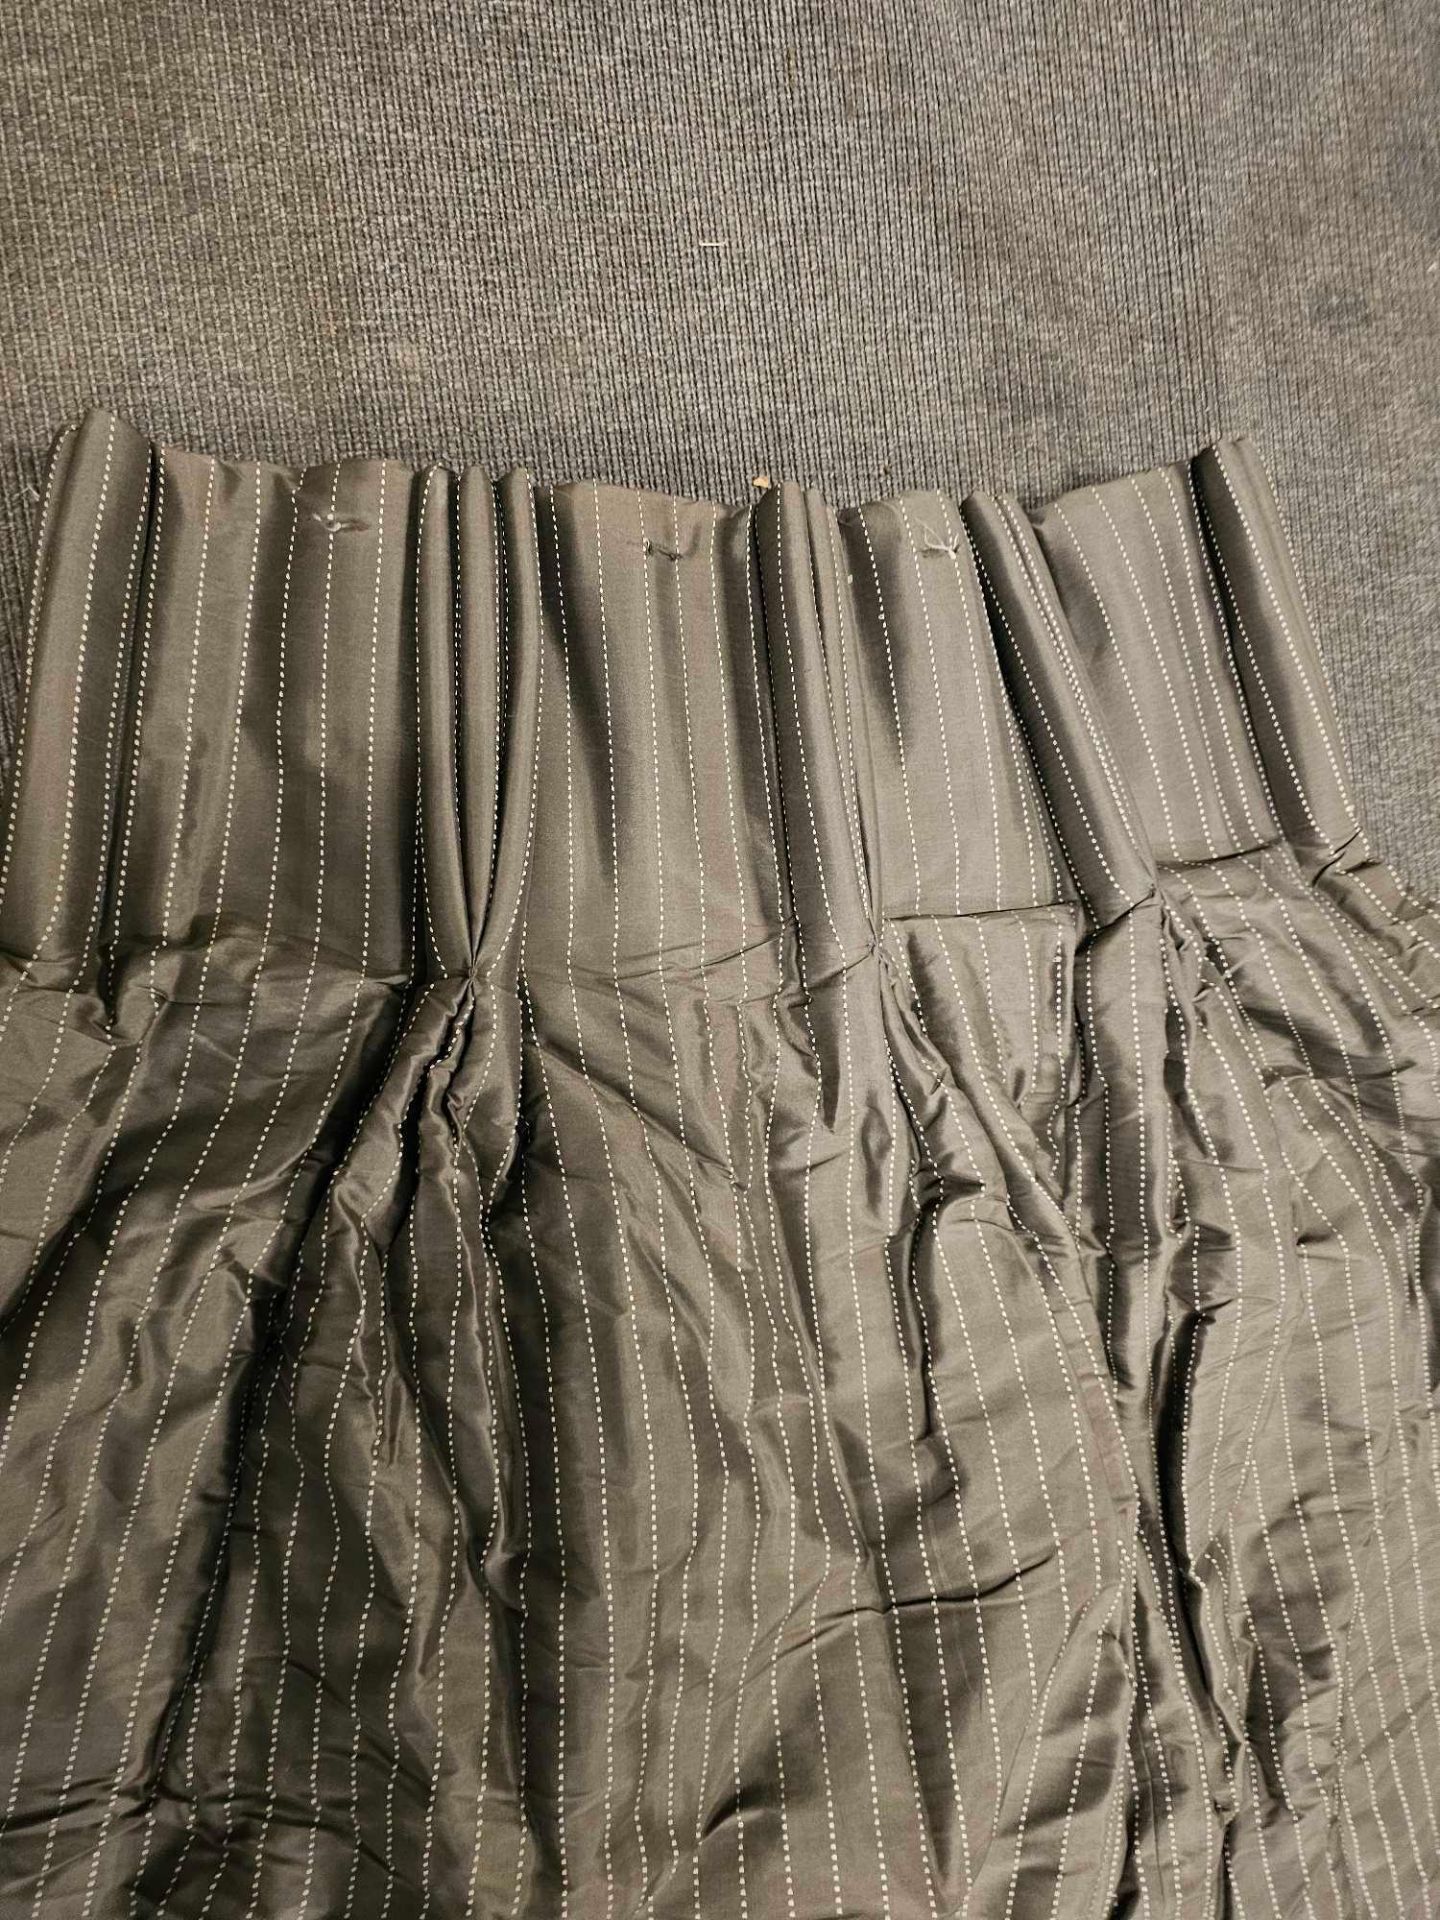 Pair Brown /White Striped Curtain Size 242 x 258cm ( Ref Dorchspa 102) - Image 2 of 3